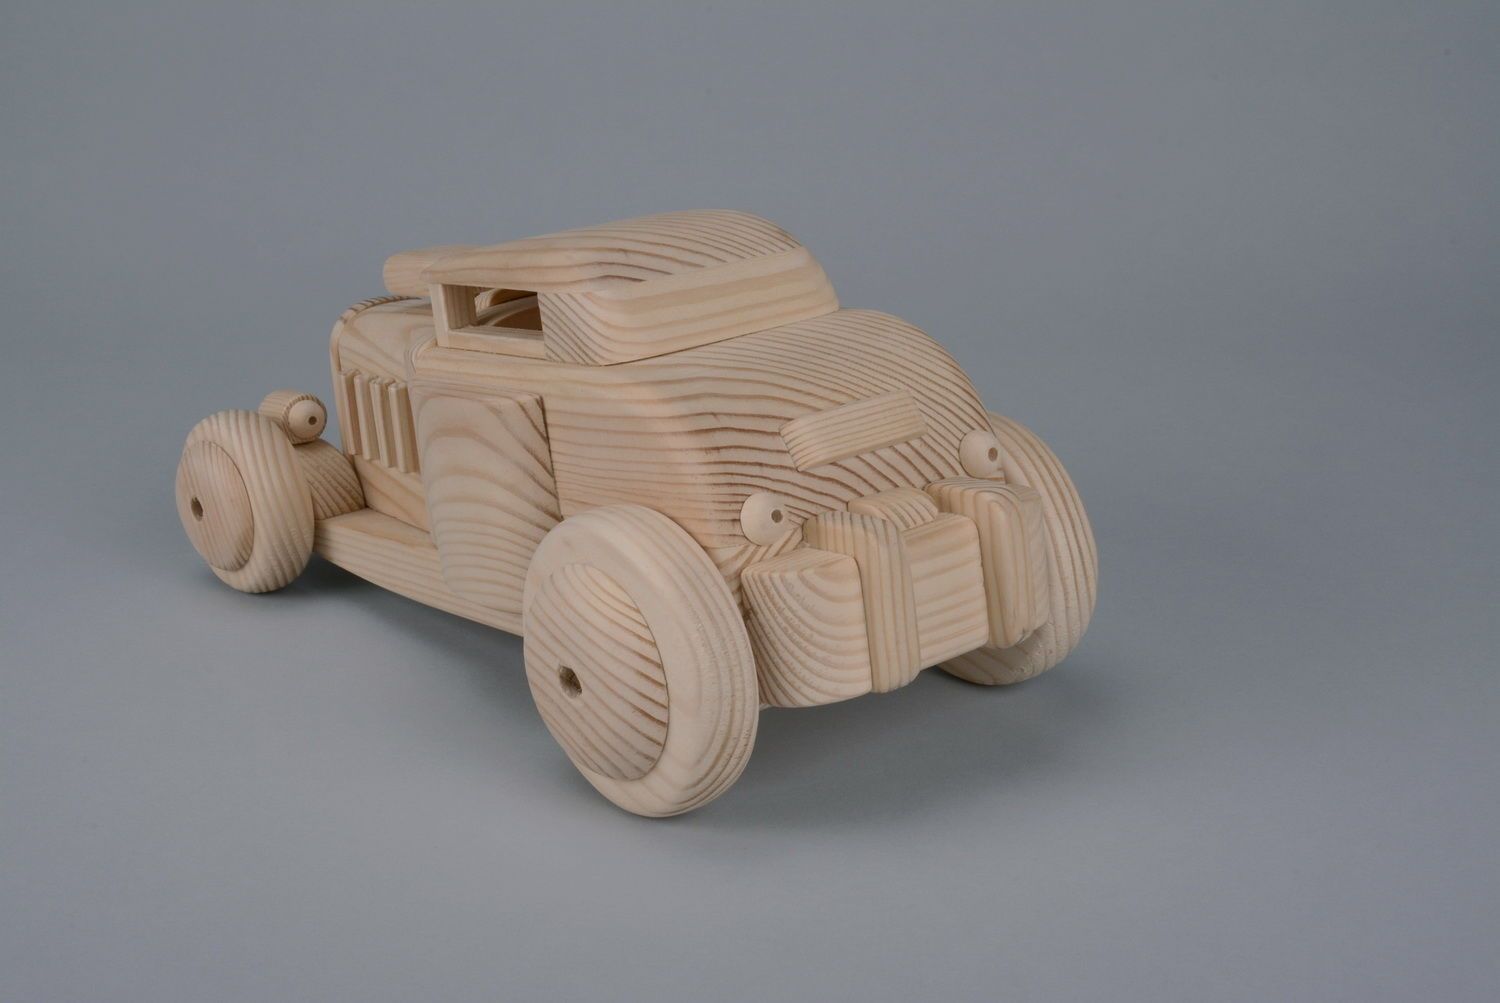 Cochecito de juguete tallado a mano de madera foto 3